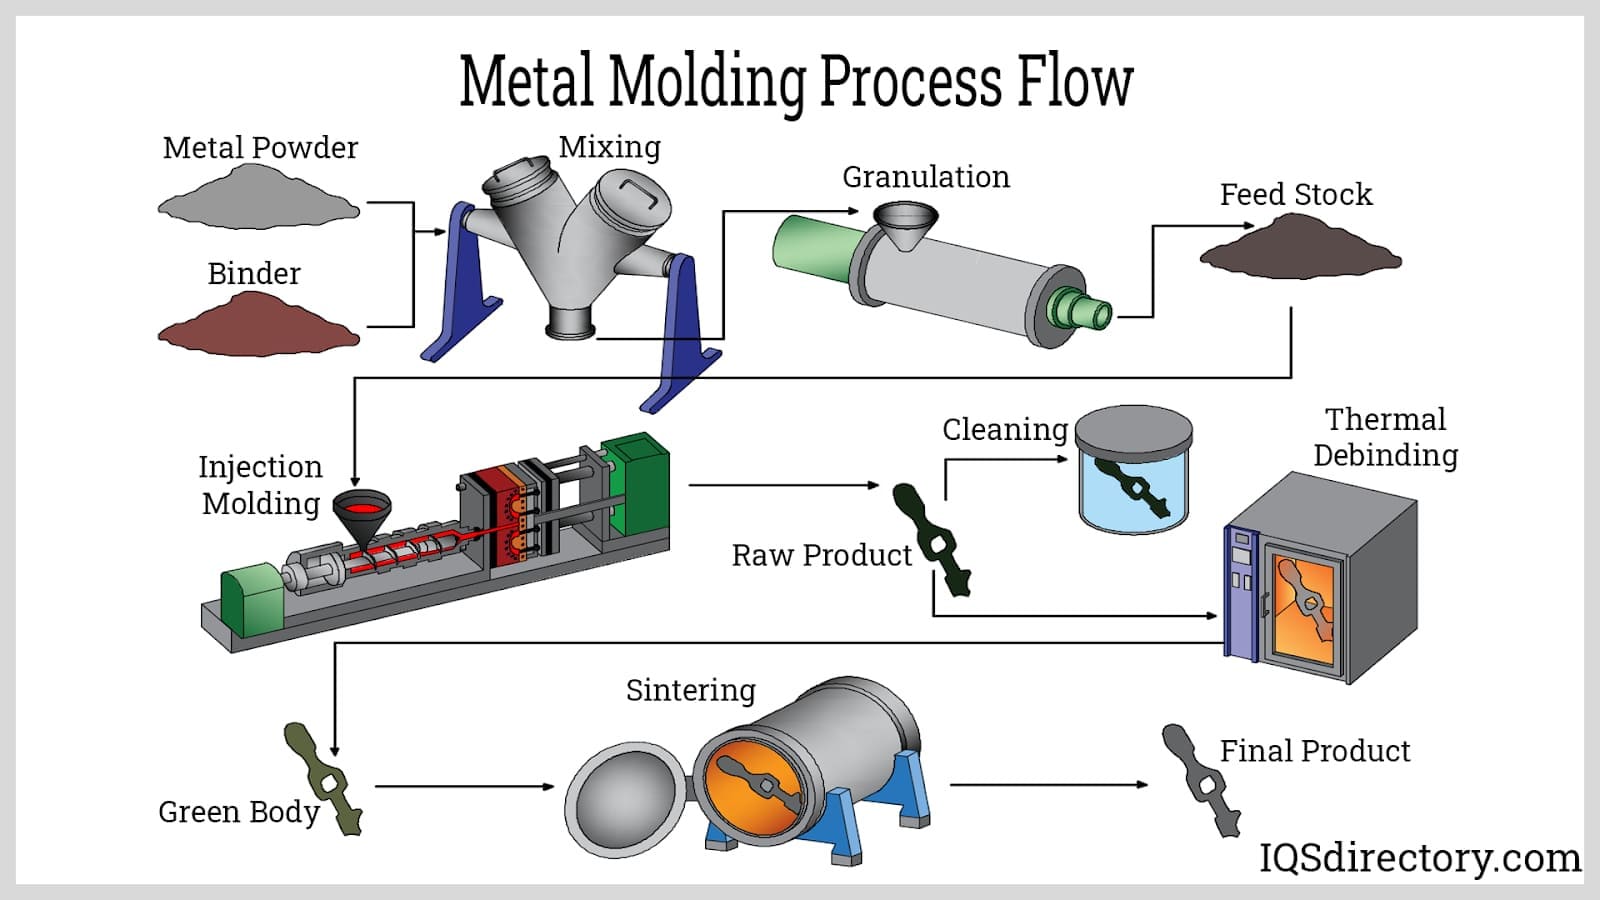 Metal Molding Process Flow